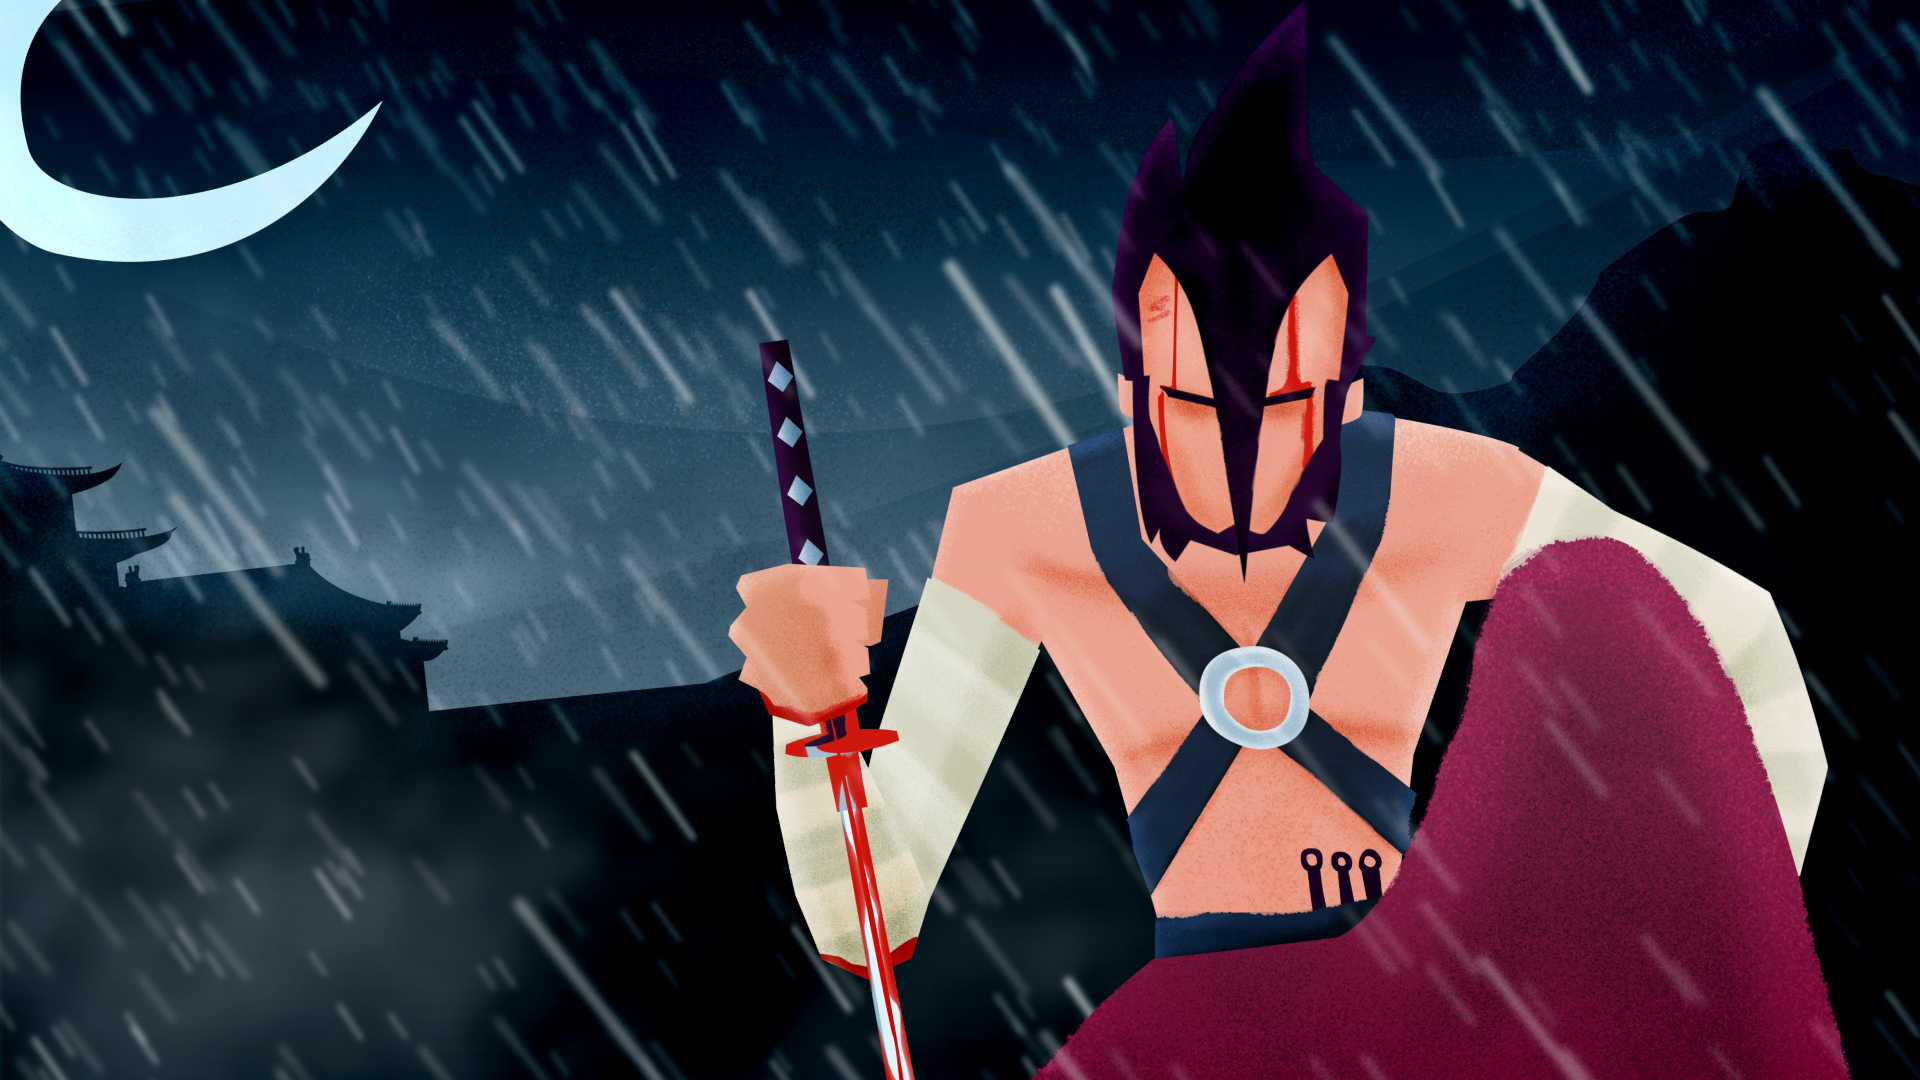 westworld animated music video samurai winter castle fight